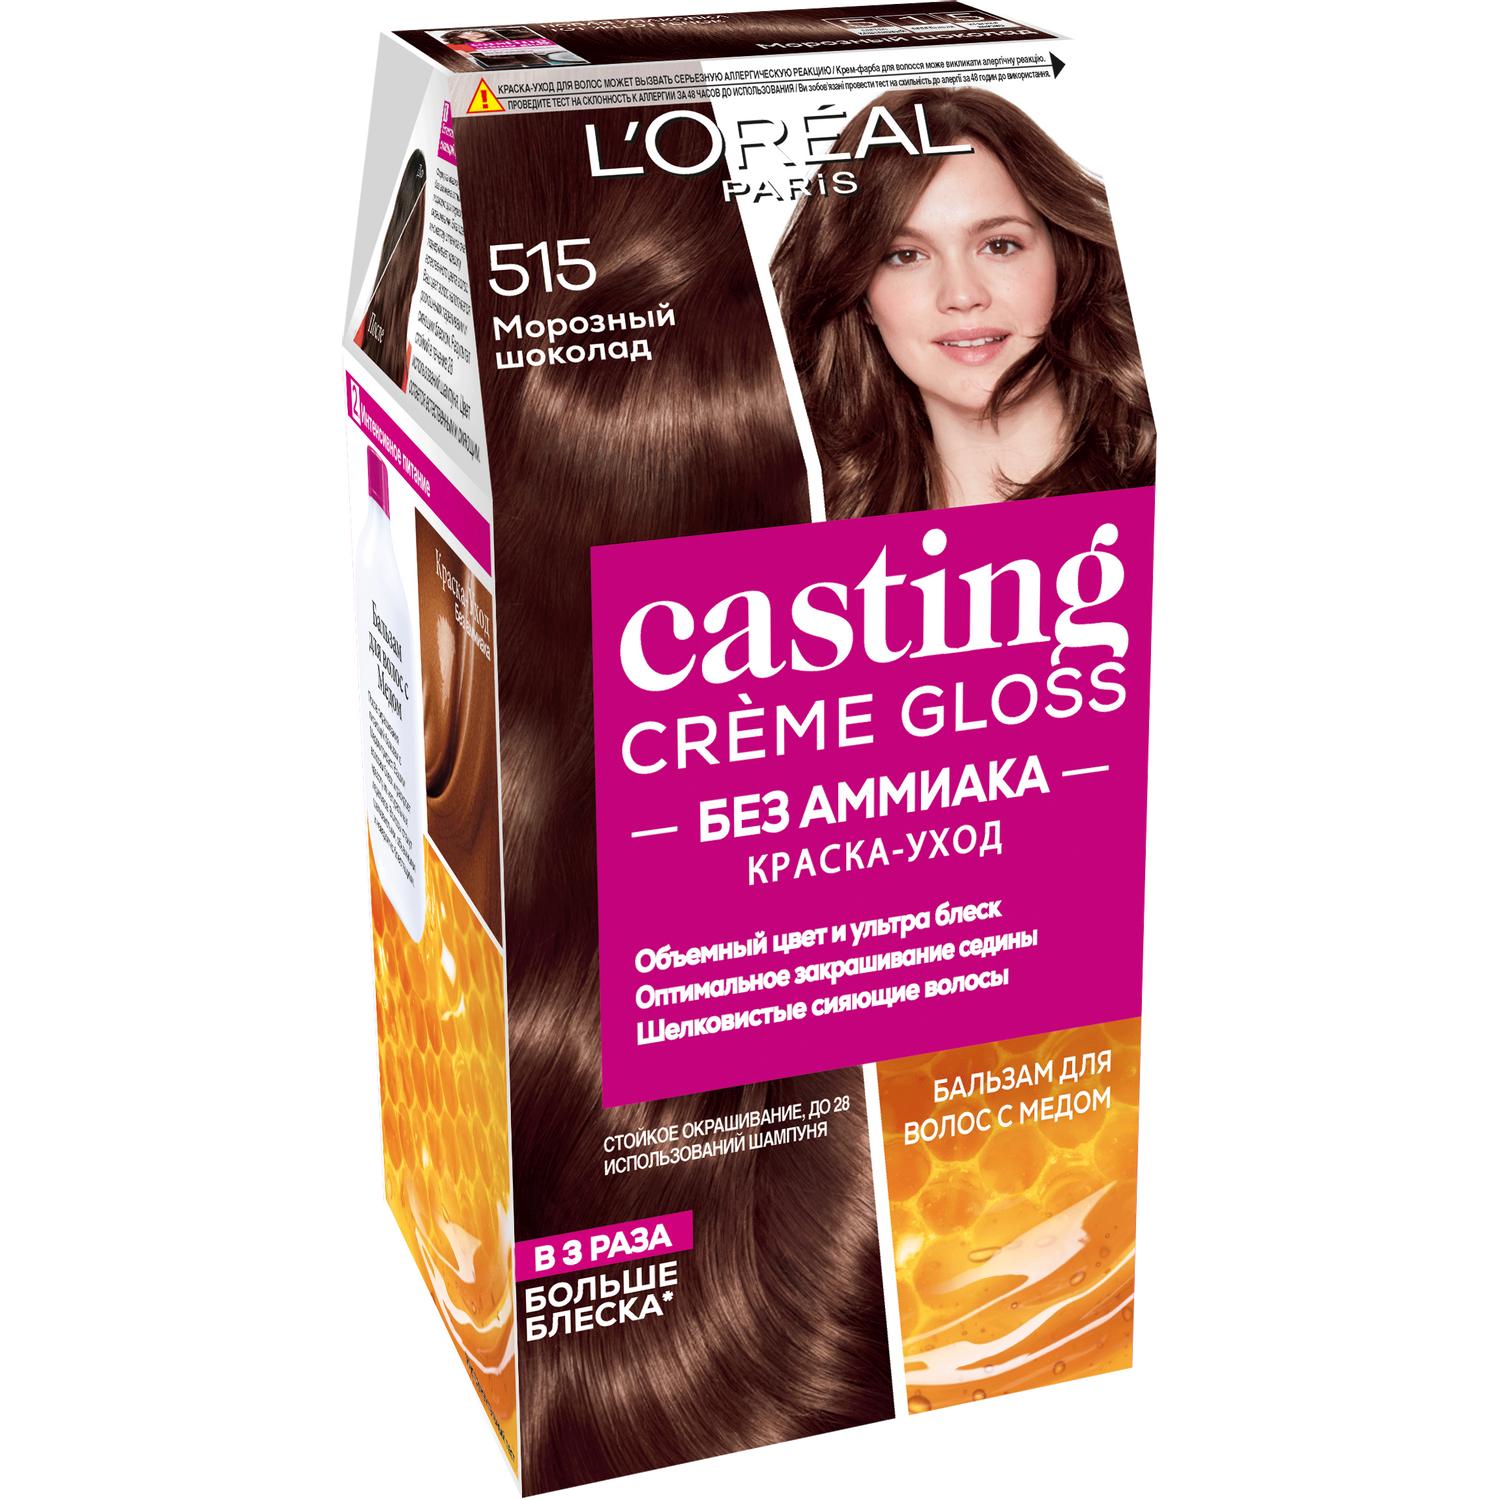 Краска L’Oreal Casting Creme Gloss 515 254 мл Морозный шоколад (A3170704) краска для волос l oreal paris excellence 4 02 пленительный каштан